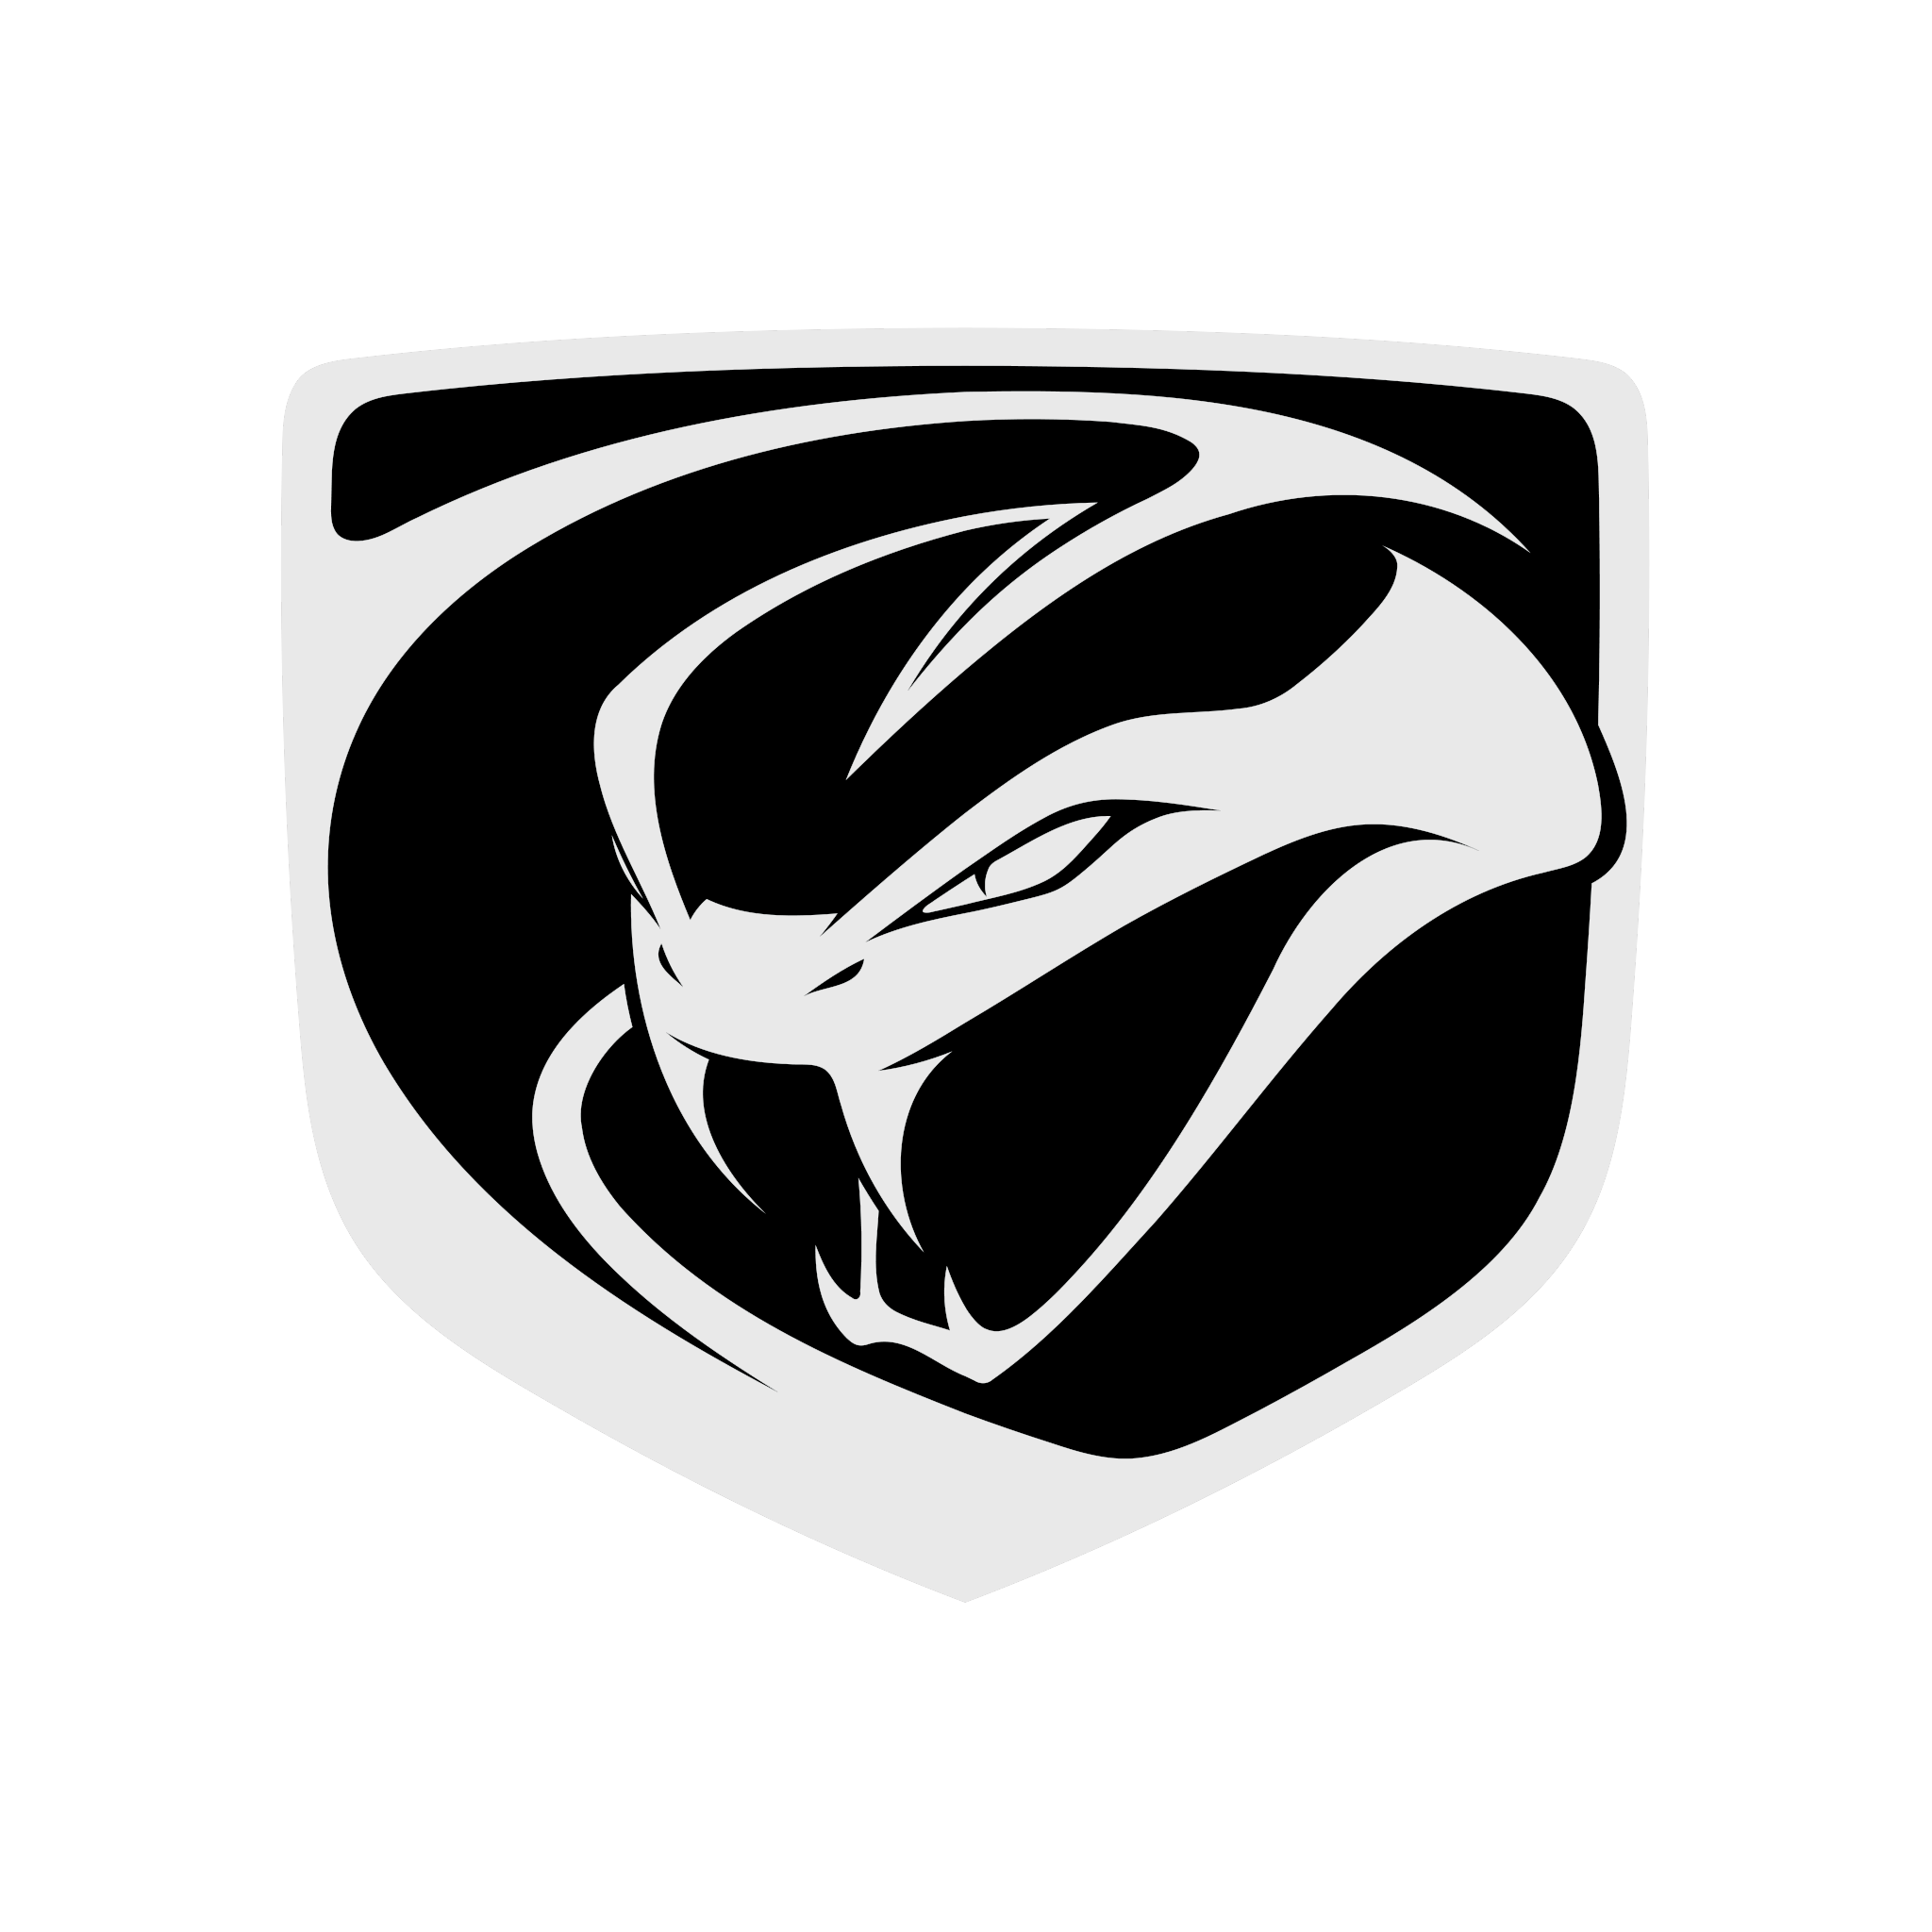 viper logo